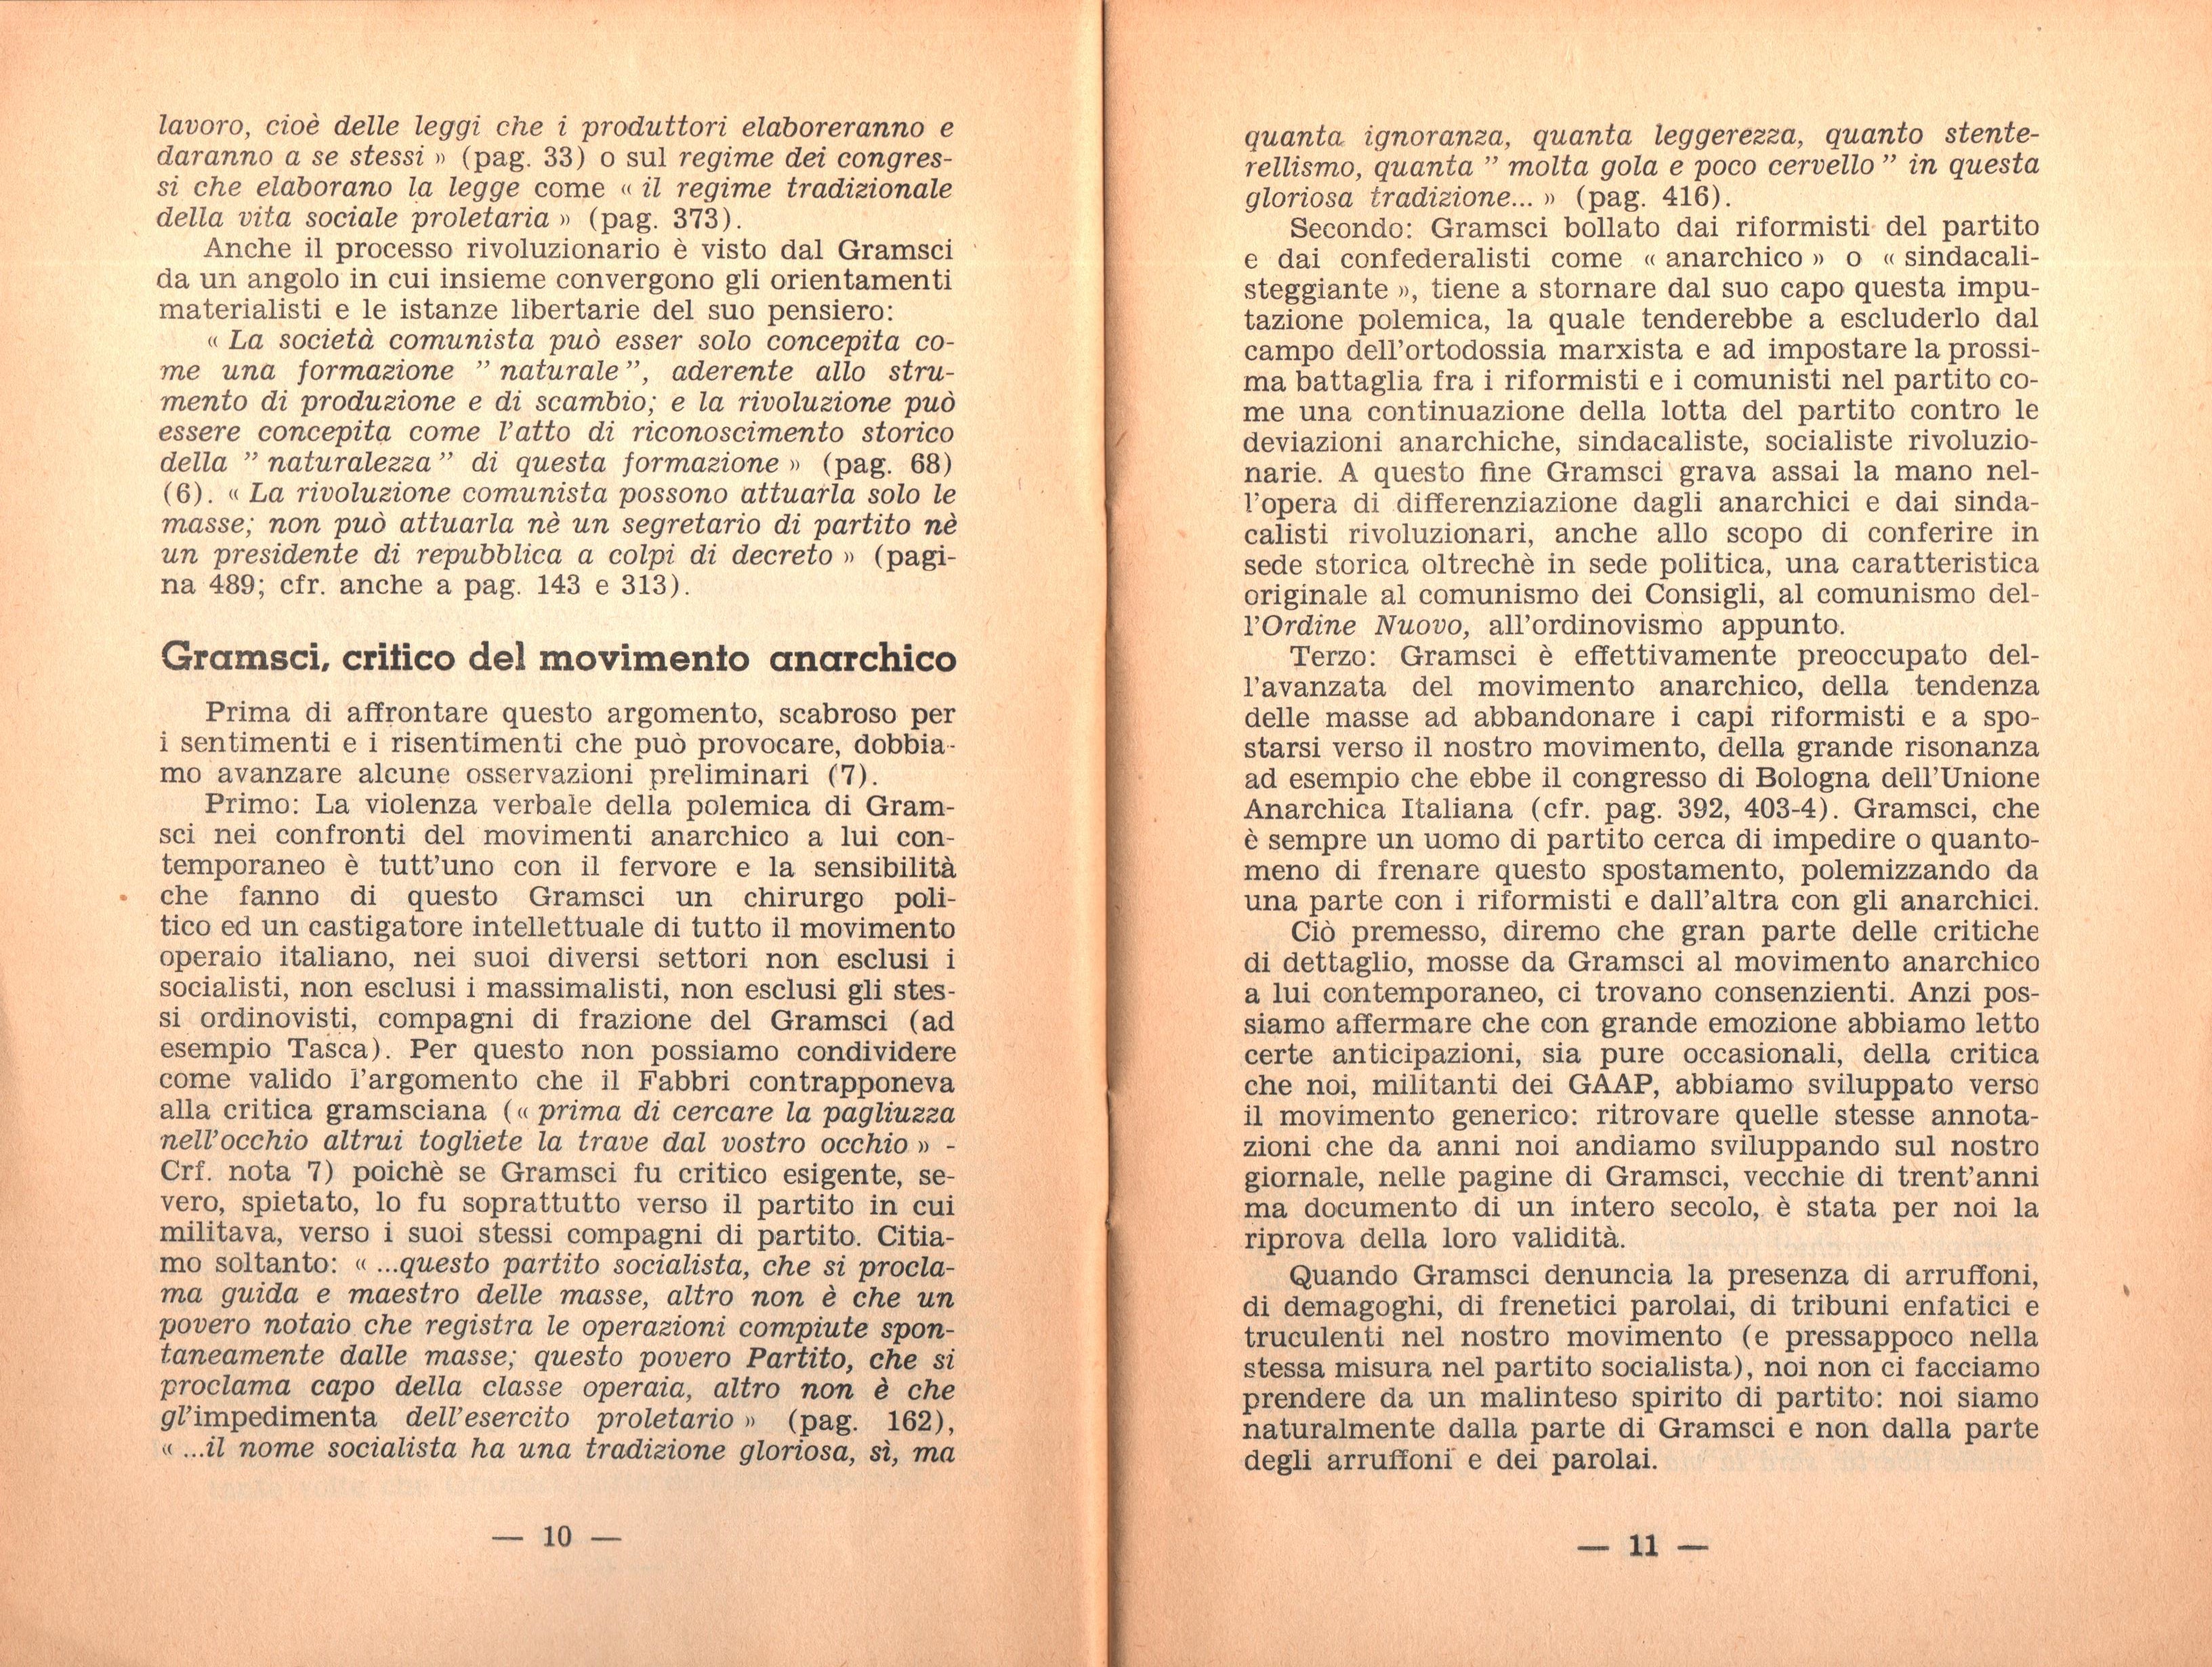 Pier Carlo Masini, Antonio Gramsci - pag. 7